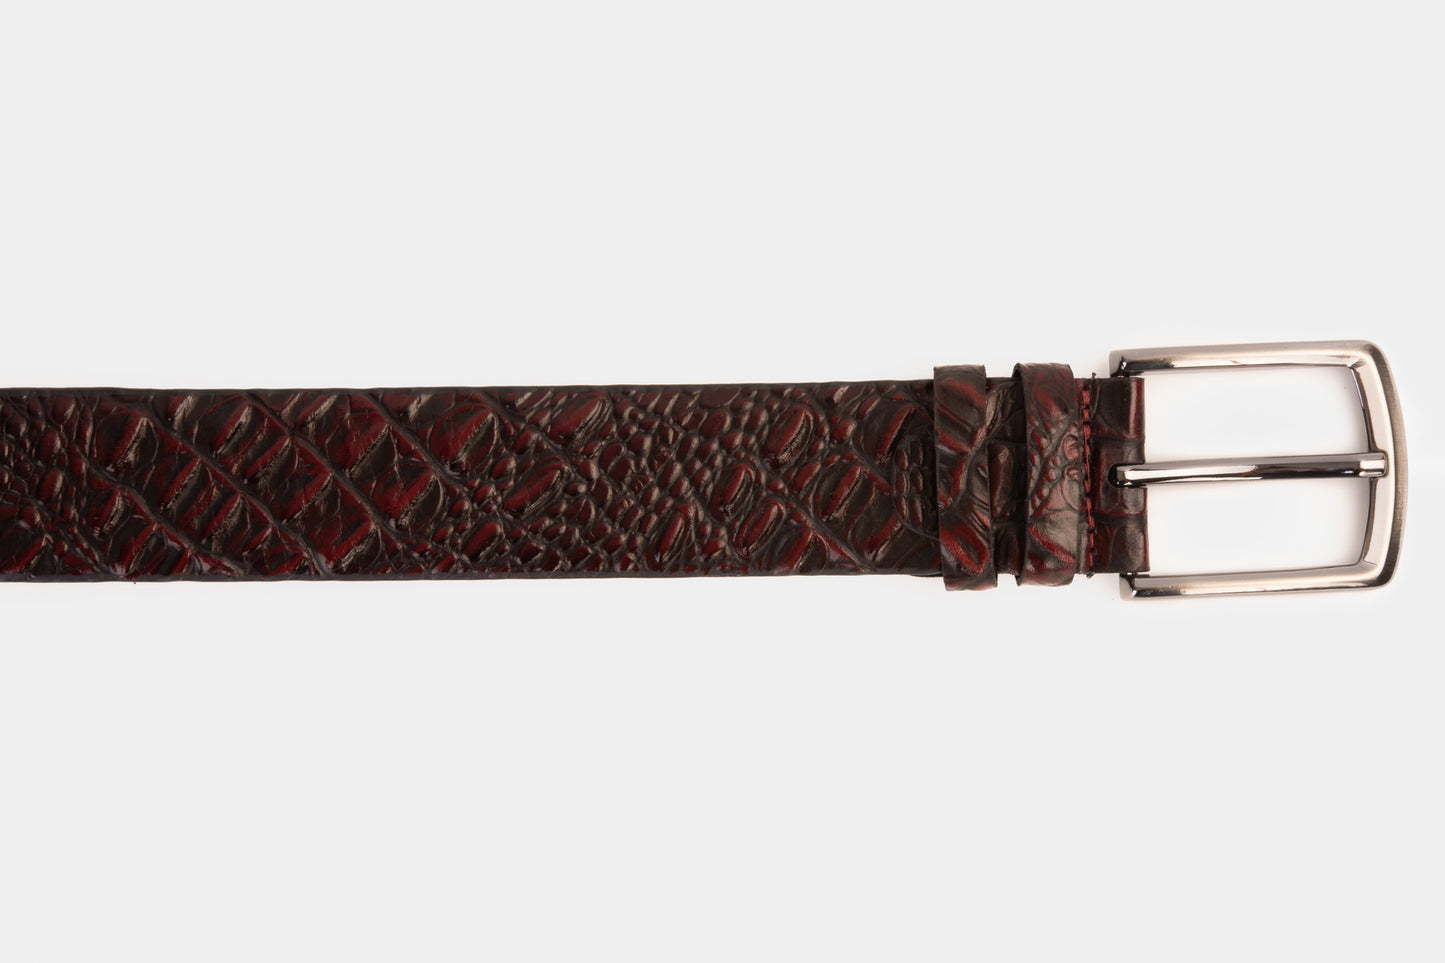 The Randor Burgundy Leather Belt